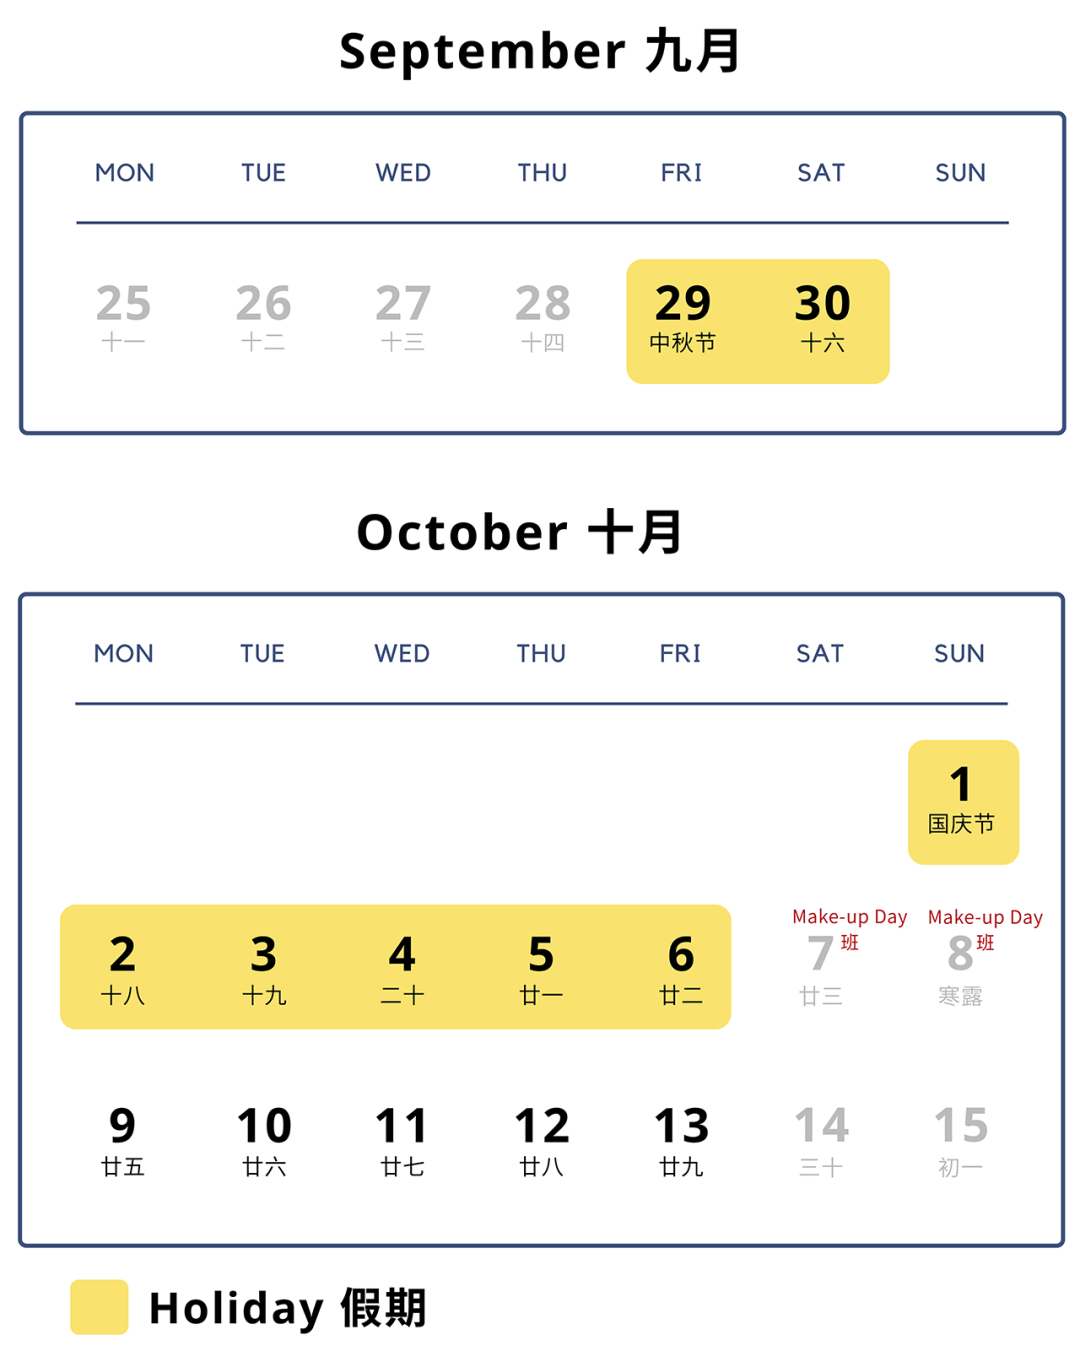 Notice of Mid-Autumn Festival and National Day | 中秋节和国庆节放假通知